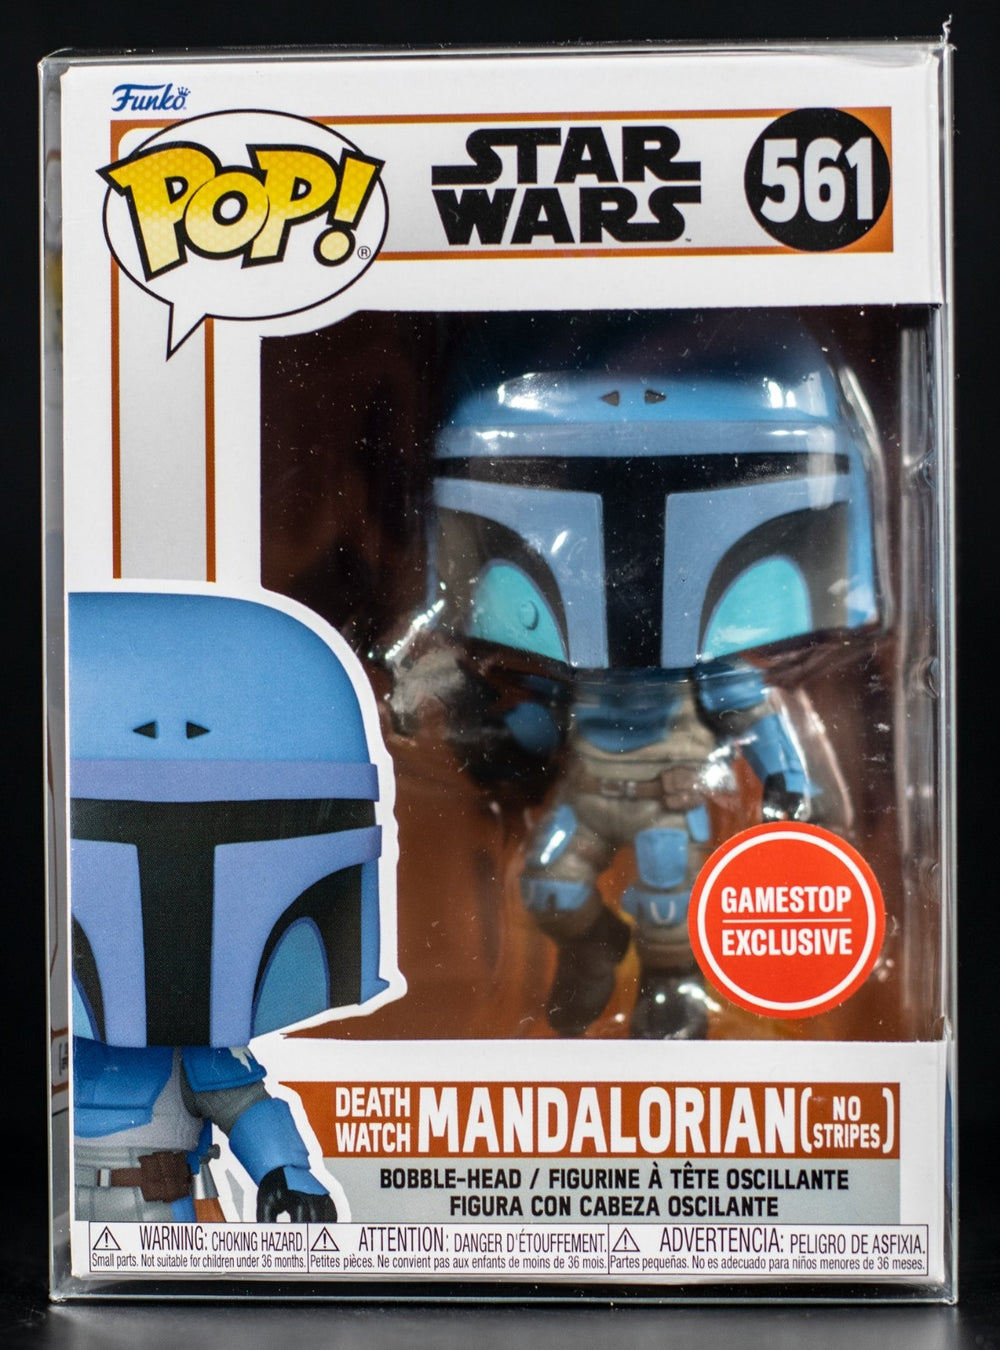 Funko Pop! Death Watch Mandalorian (No Stripes) #561 Star Wars